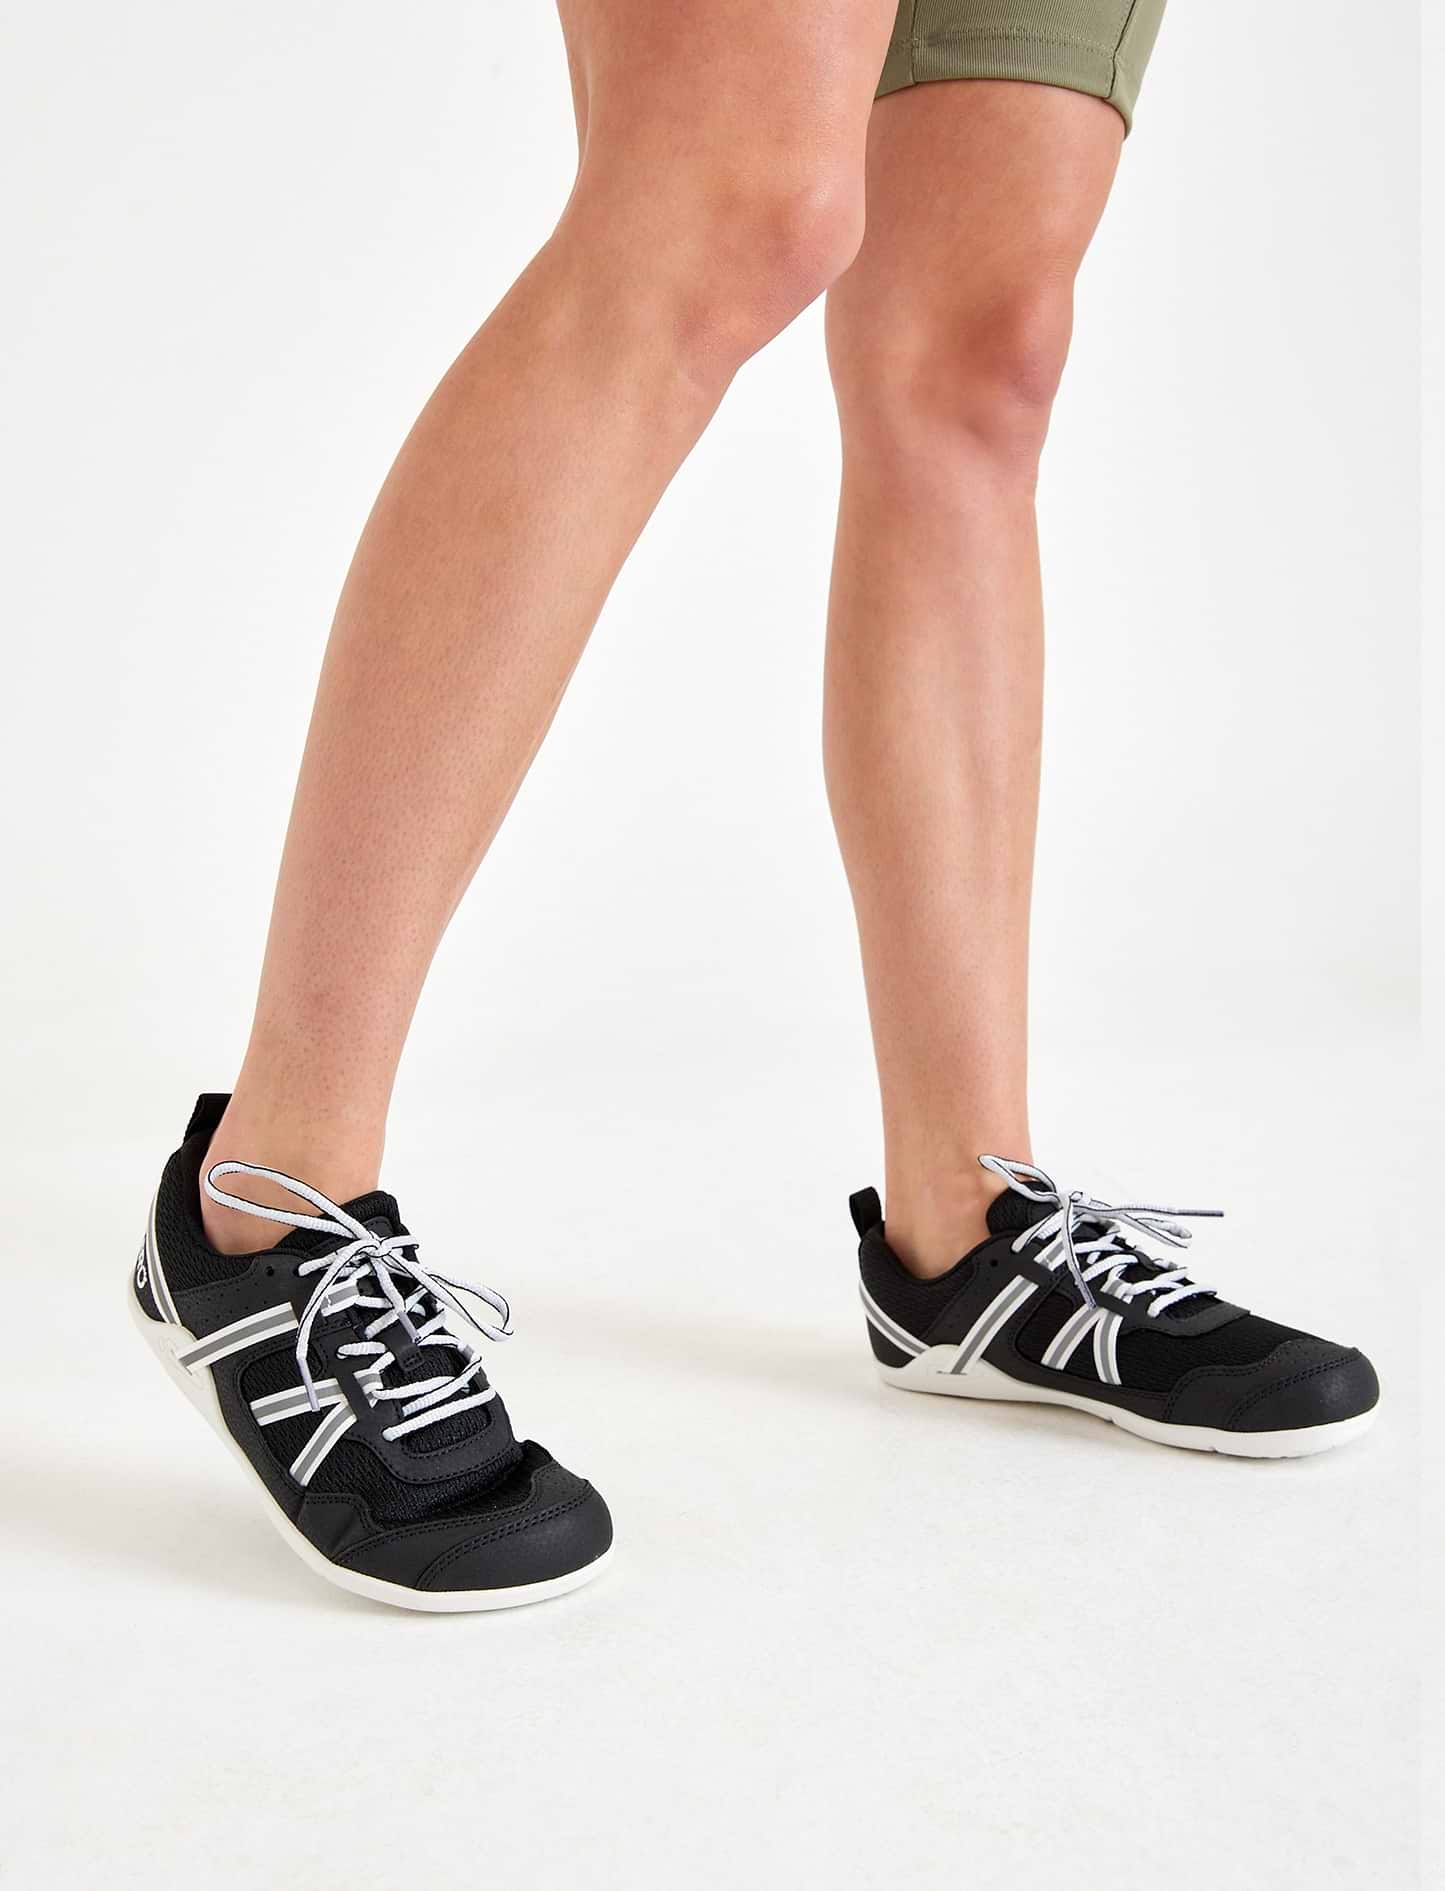 Xero Prio Women - נעלי ריצה לנשים פריו זרו